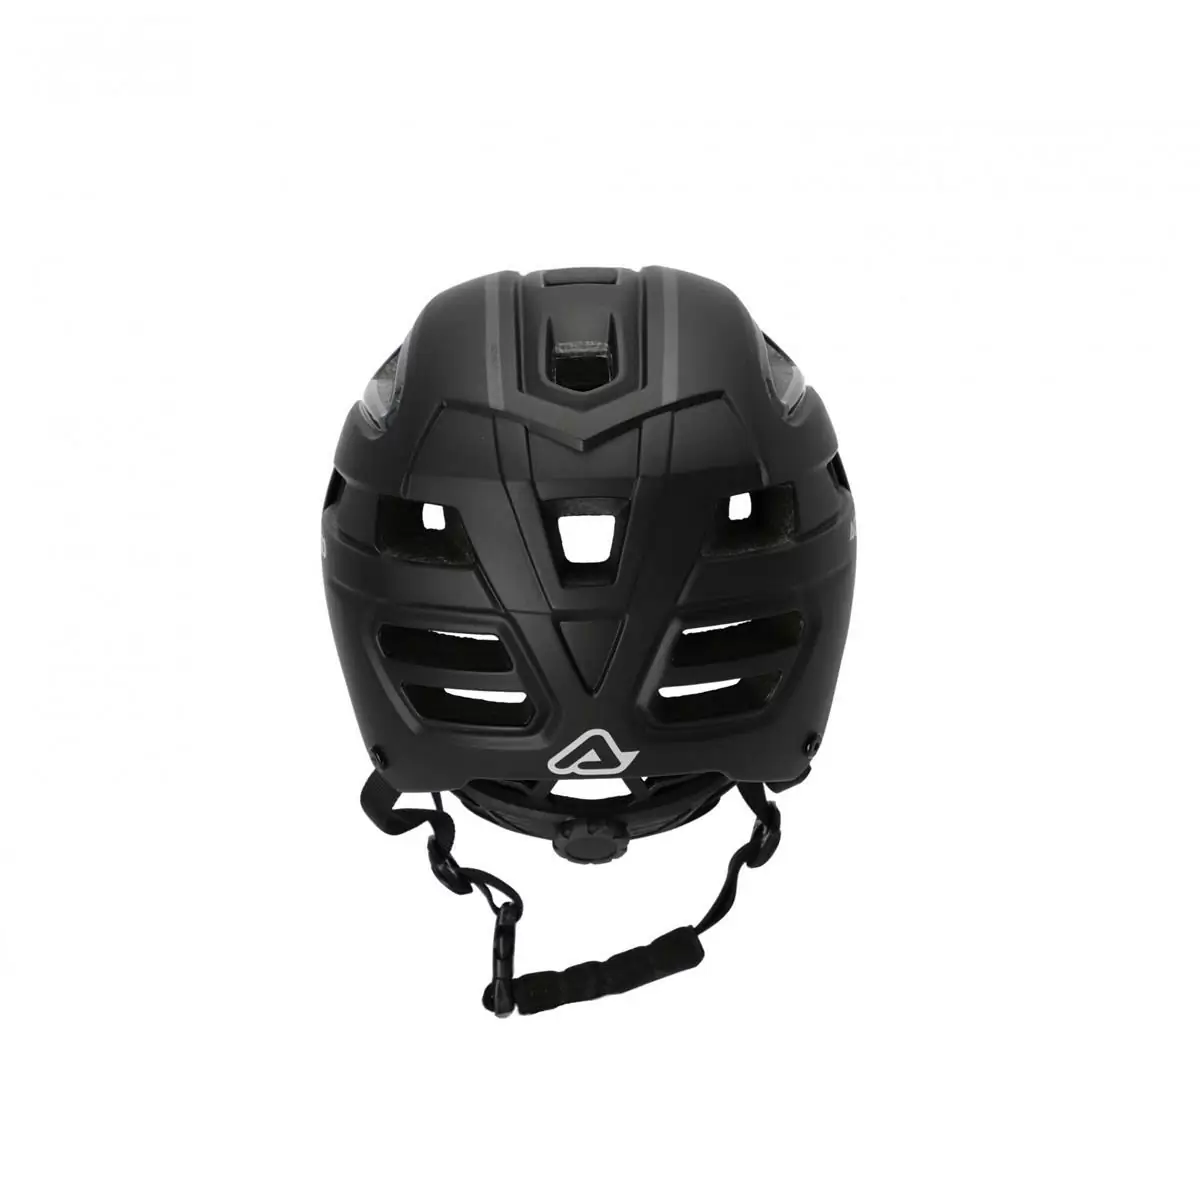 Helmet DoubleP black size S/M (53-58) #3